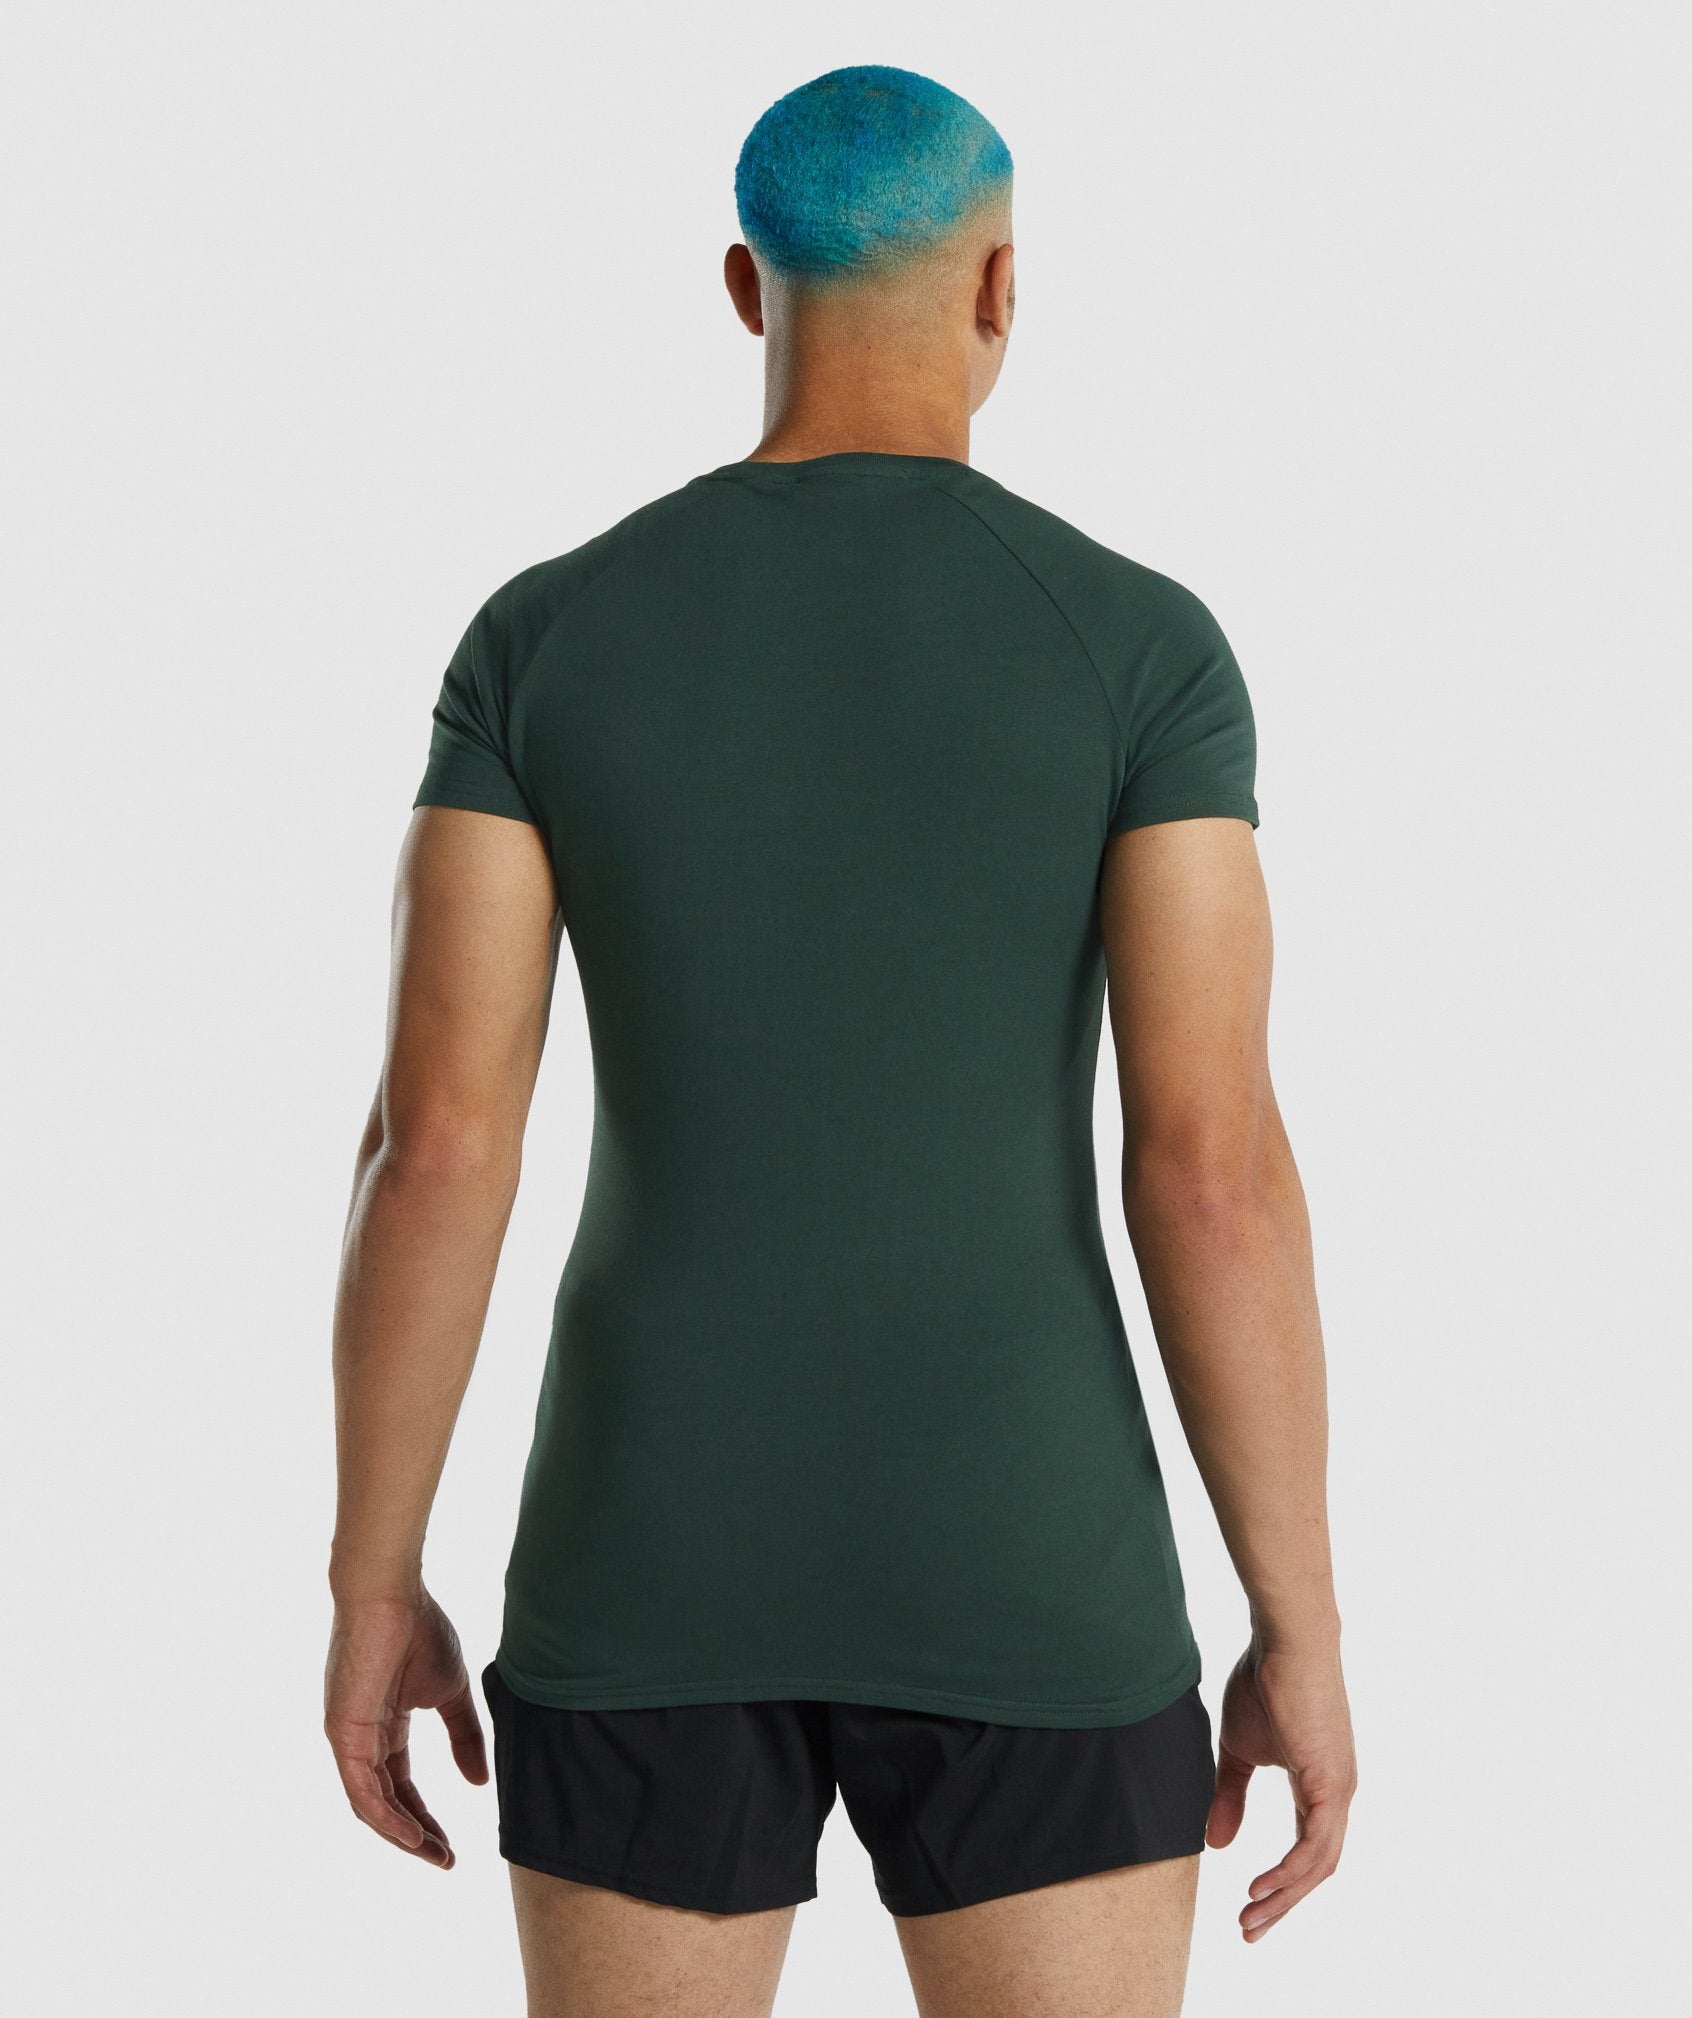 Apollo T-Shirt in Dark Green - view 2